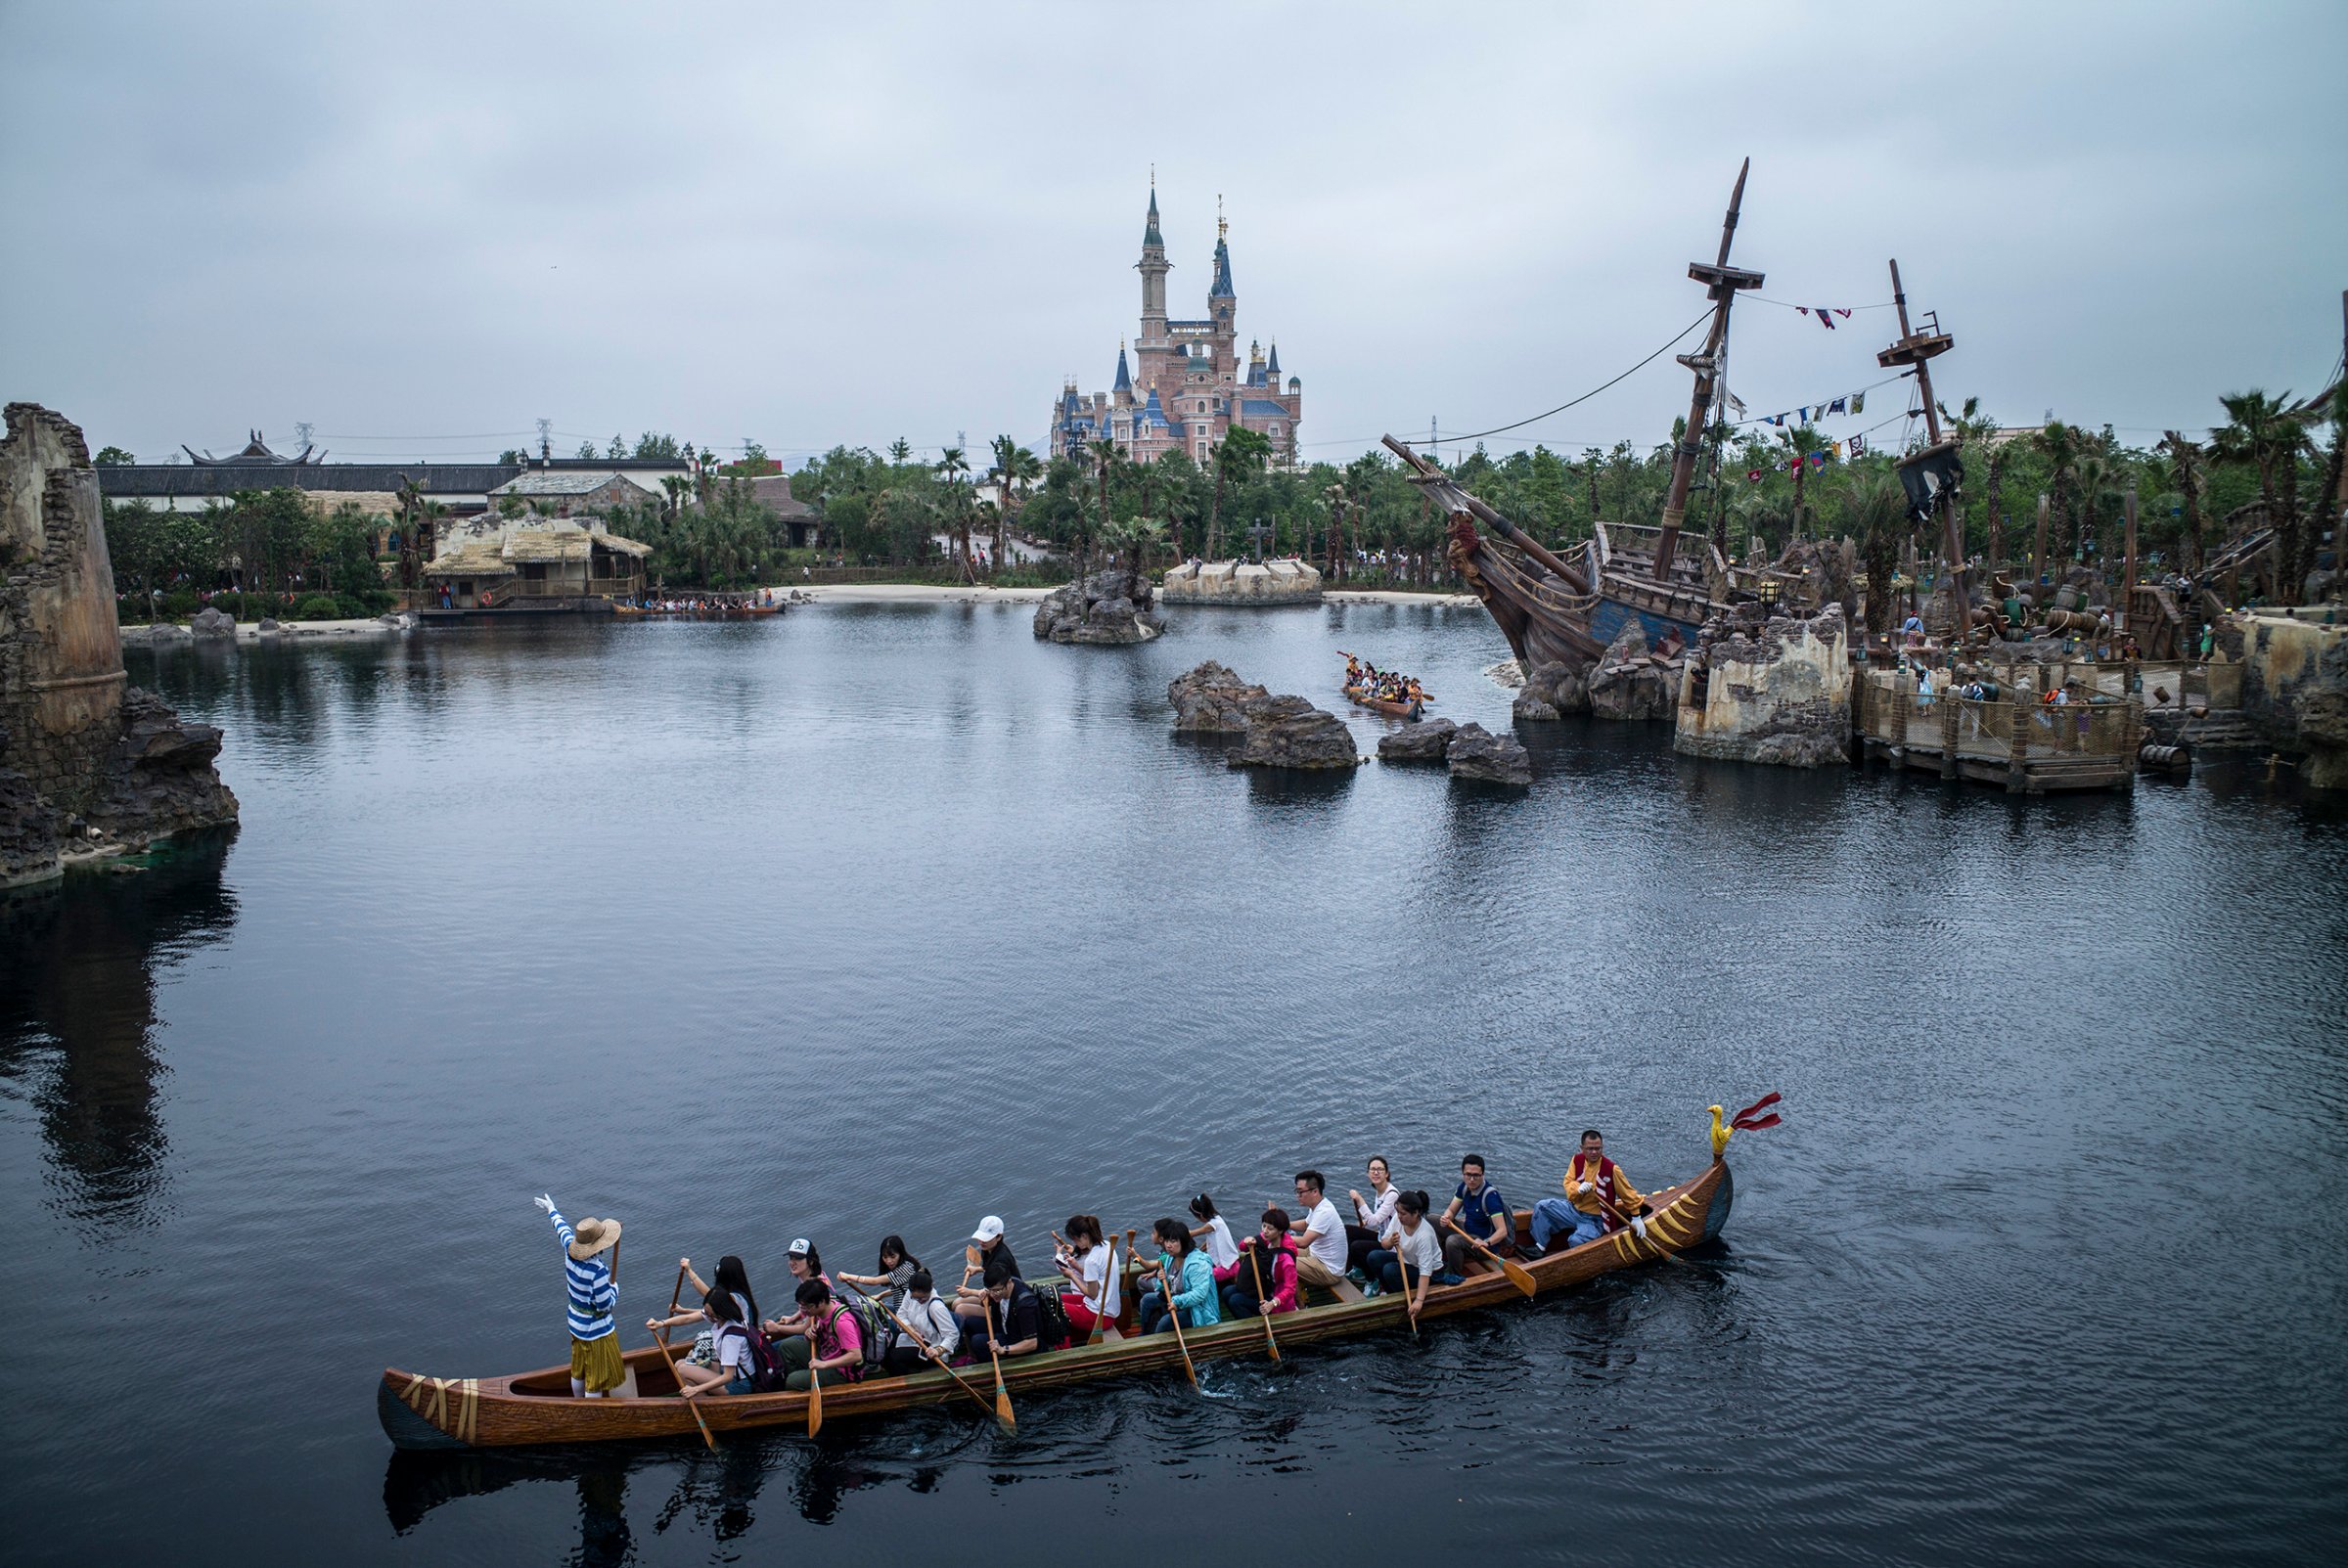 Visitors take the canoe ride at Treasure Cove during a preview at Shanghai Disneyland, June 10, 2016.